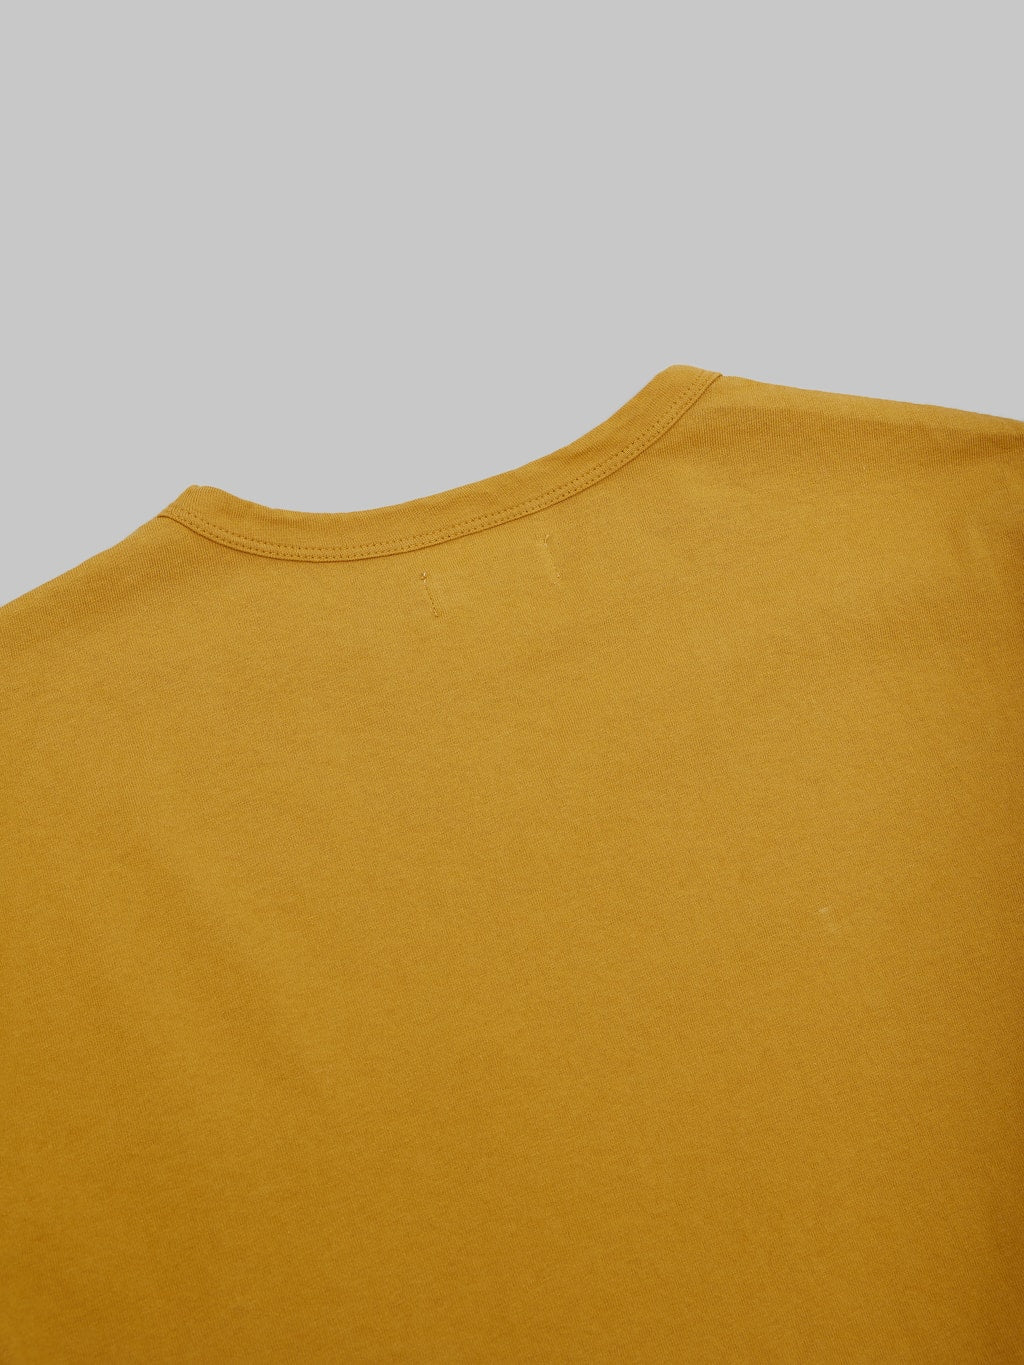 freenote cloth 9 ounce pocket t shirt mustard heavyweight back collar